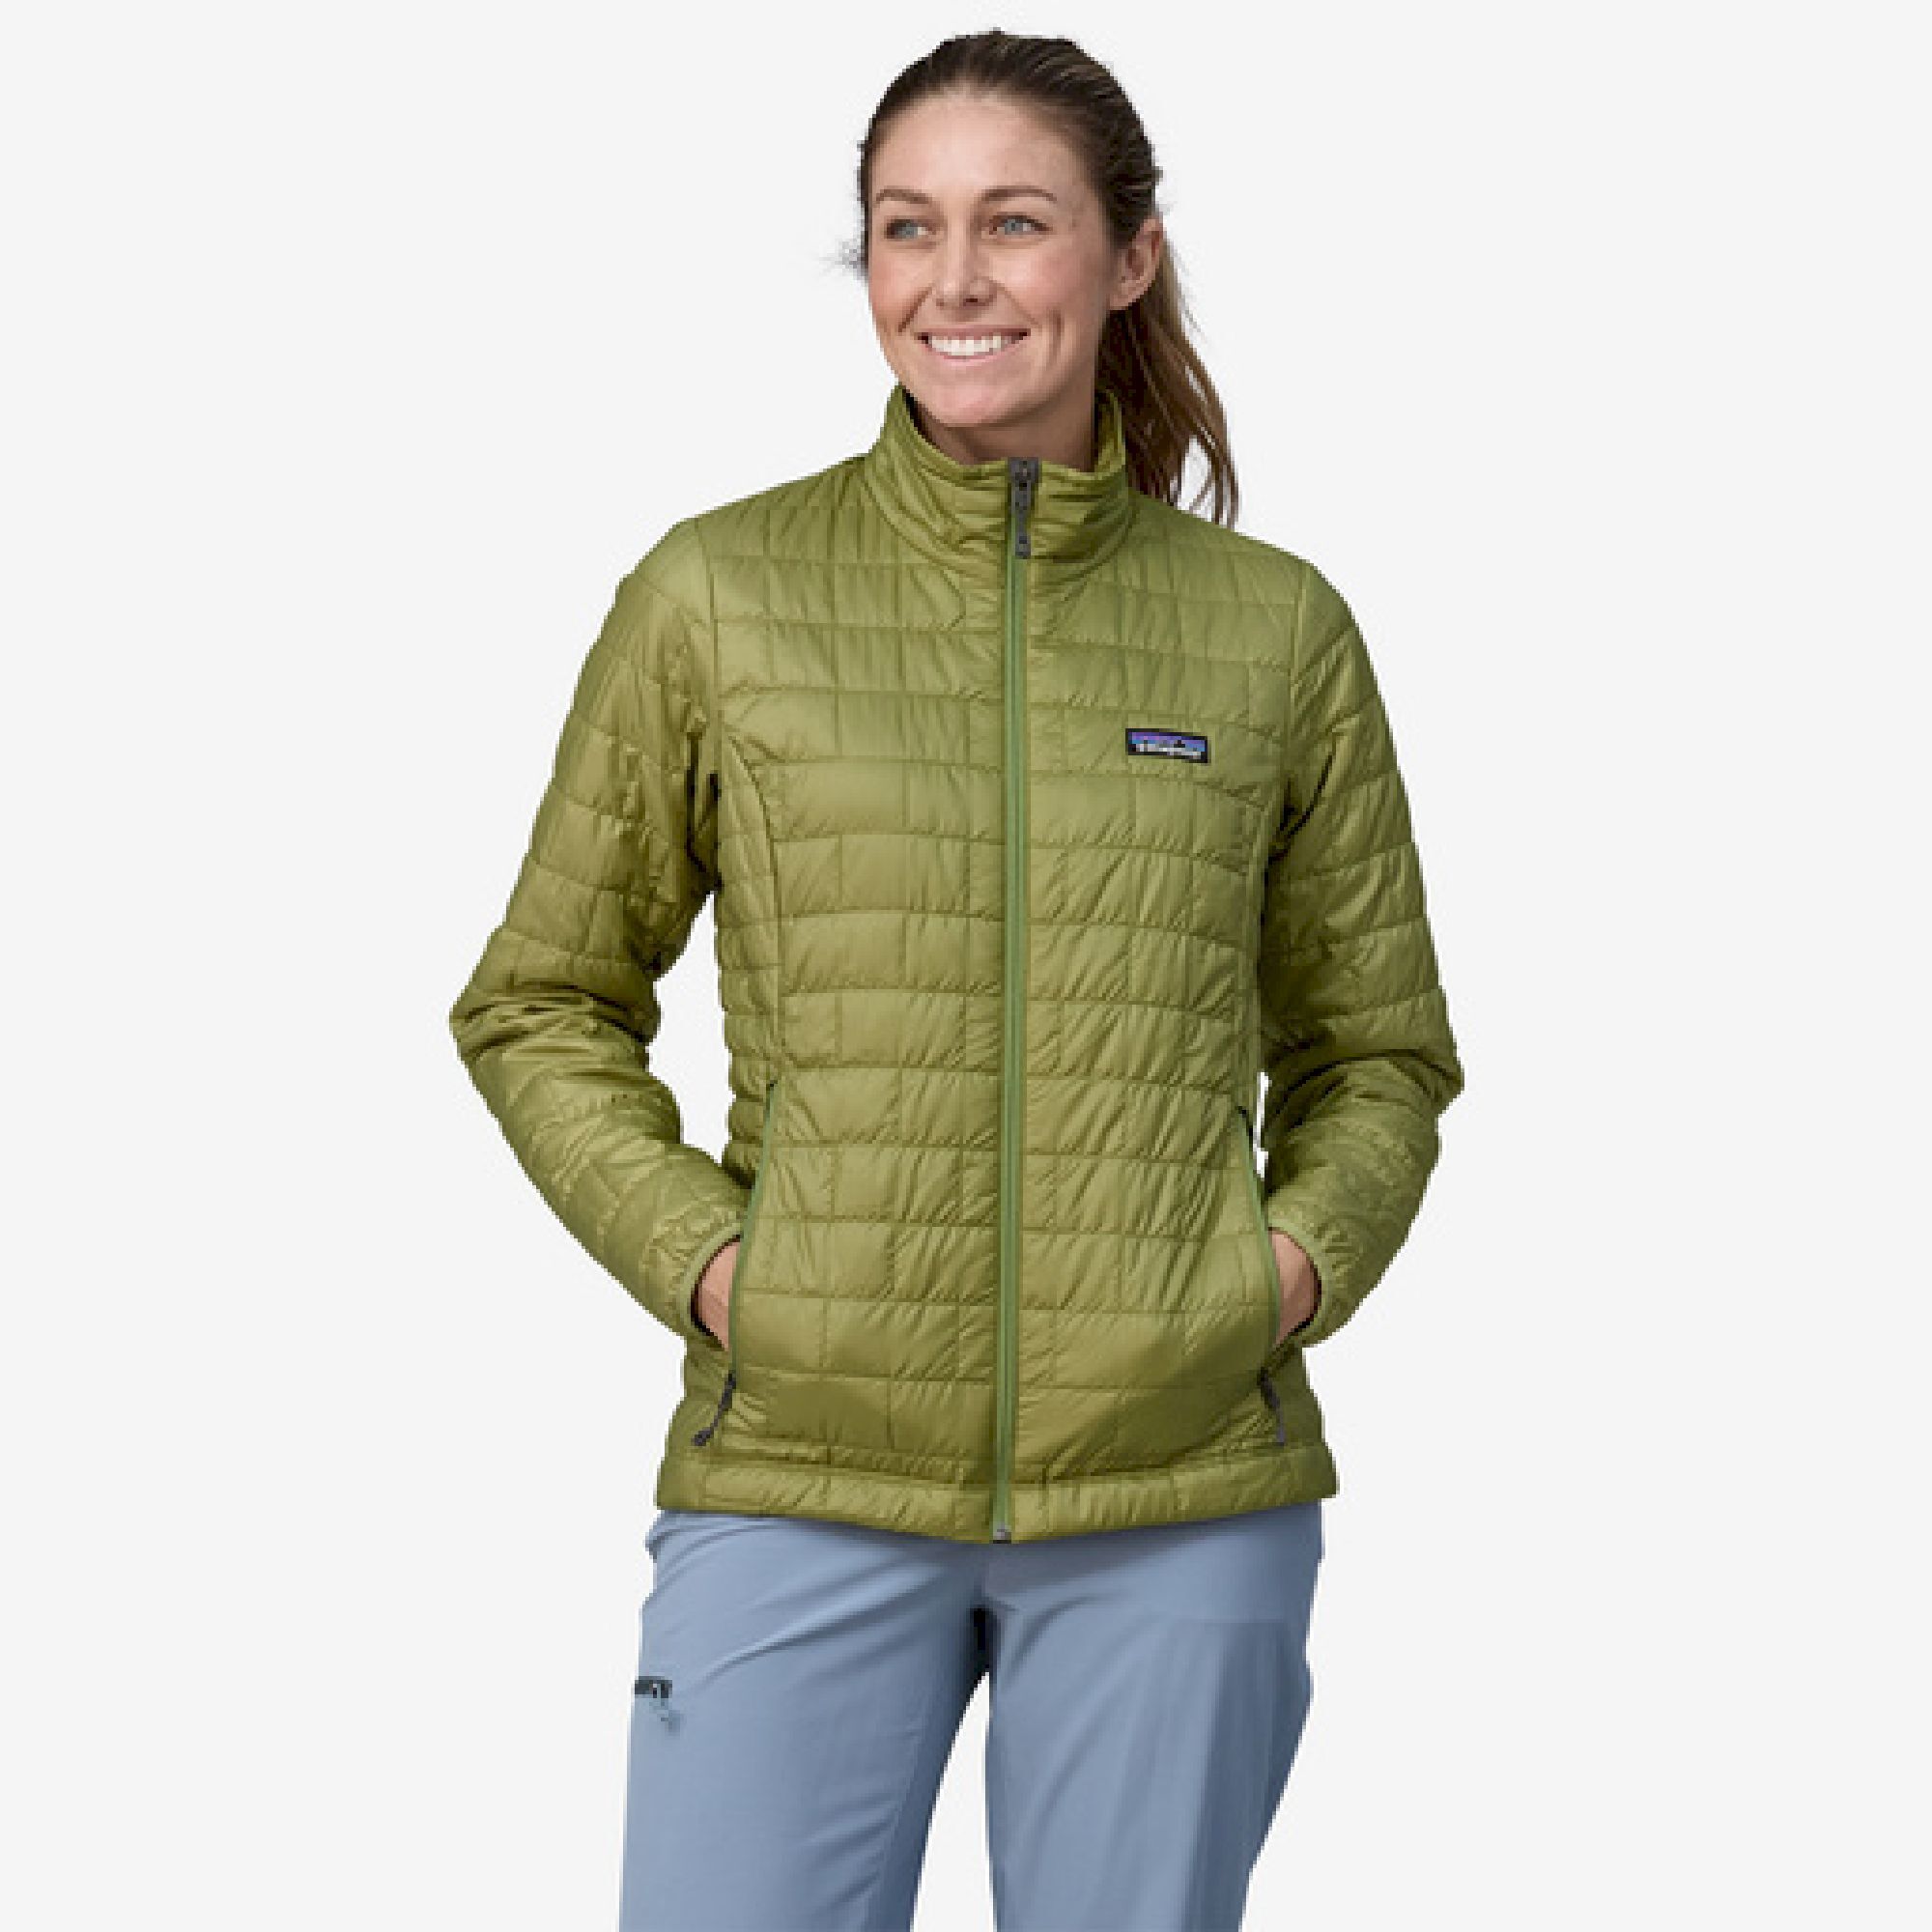 Patagonia - Nano Puff Jkt - Insulated jacket - Women's